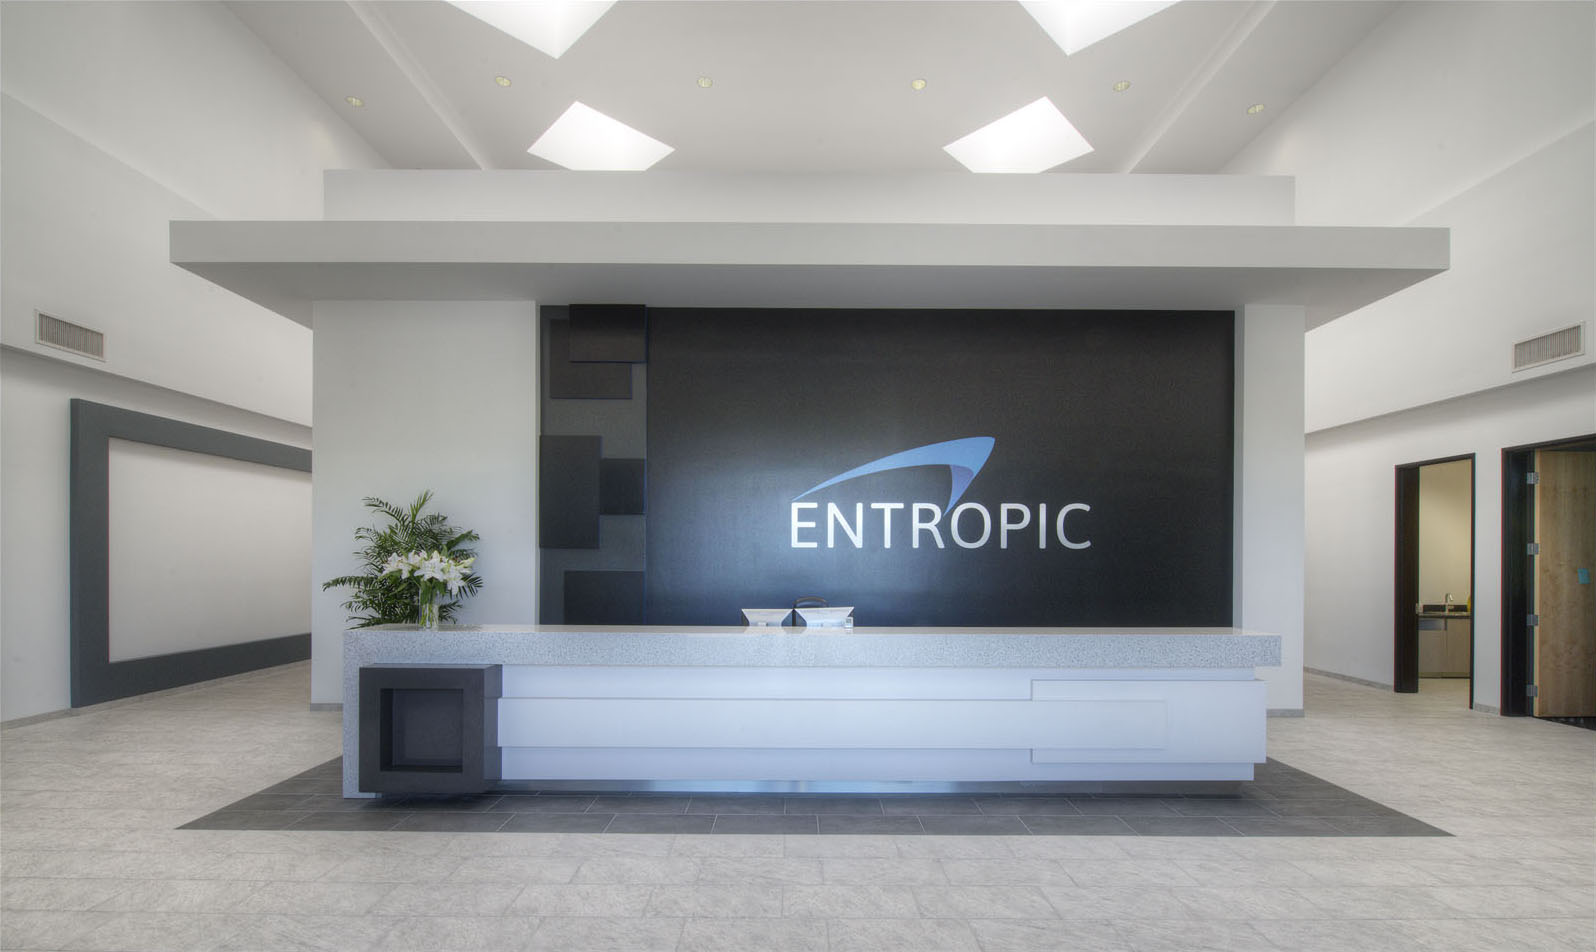 Entropic reception desk